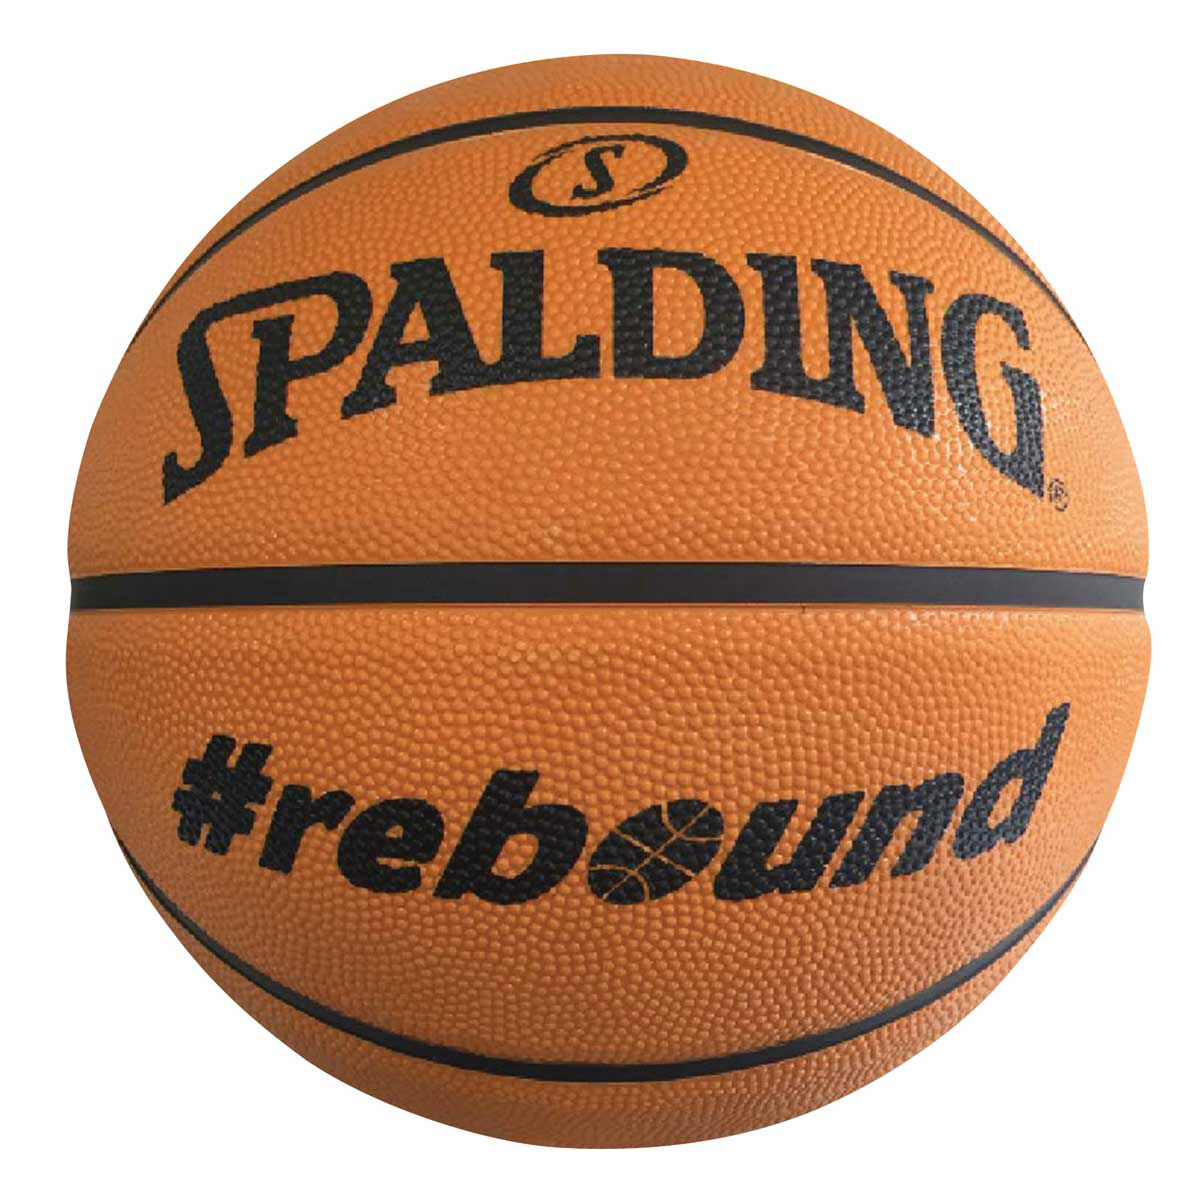 Spalding Rebound Basketball Orange / Black 5, Orange / Black, rebel_hi-res